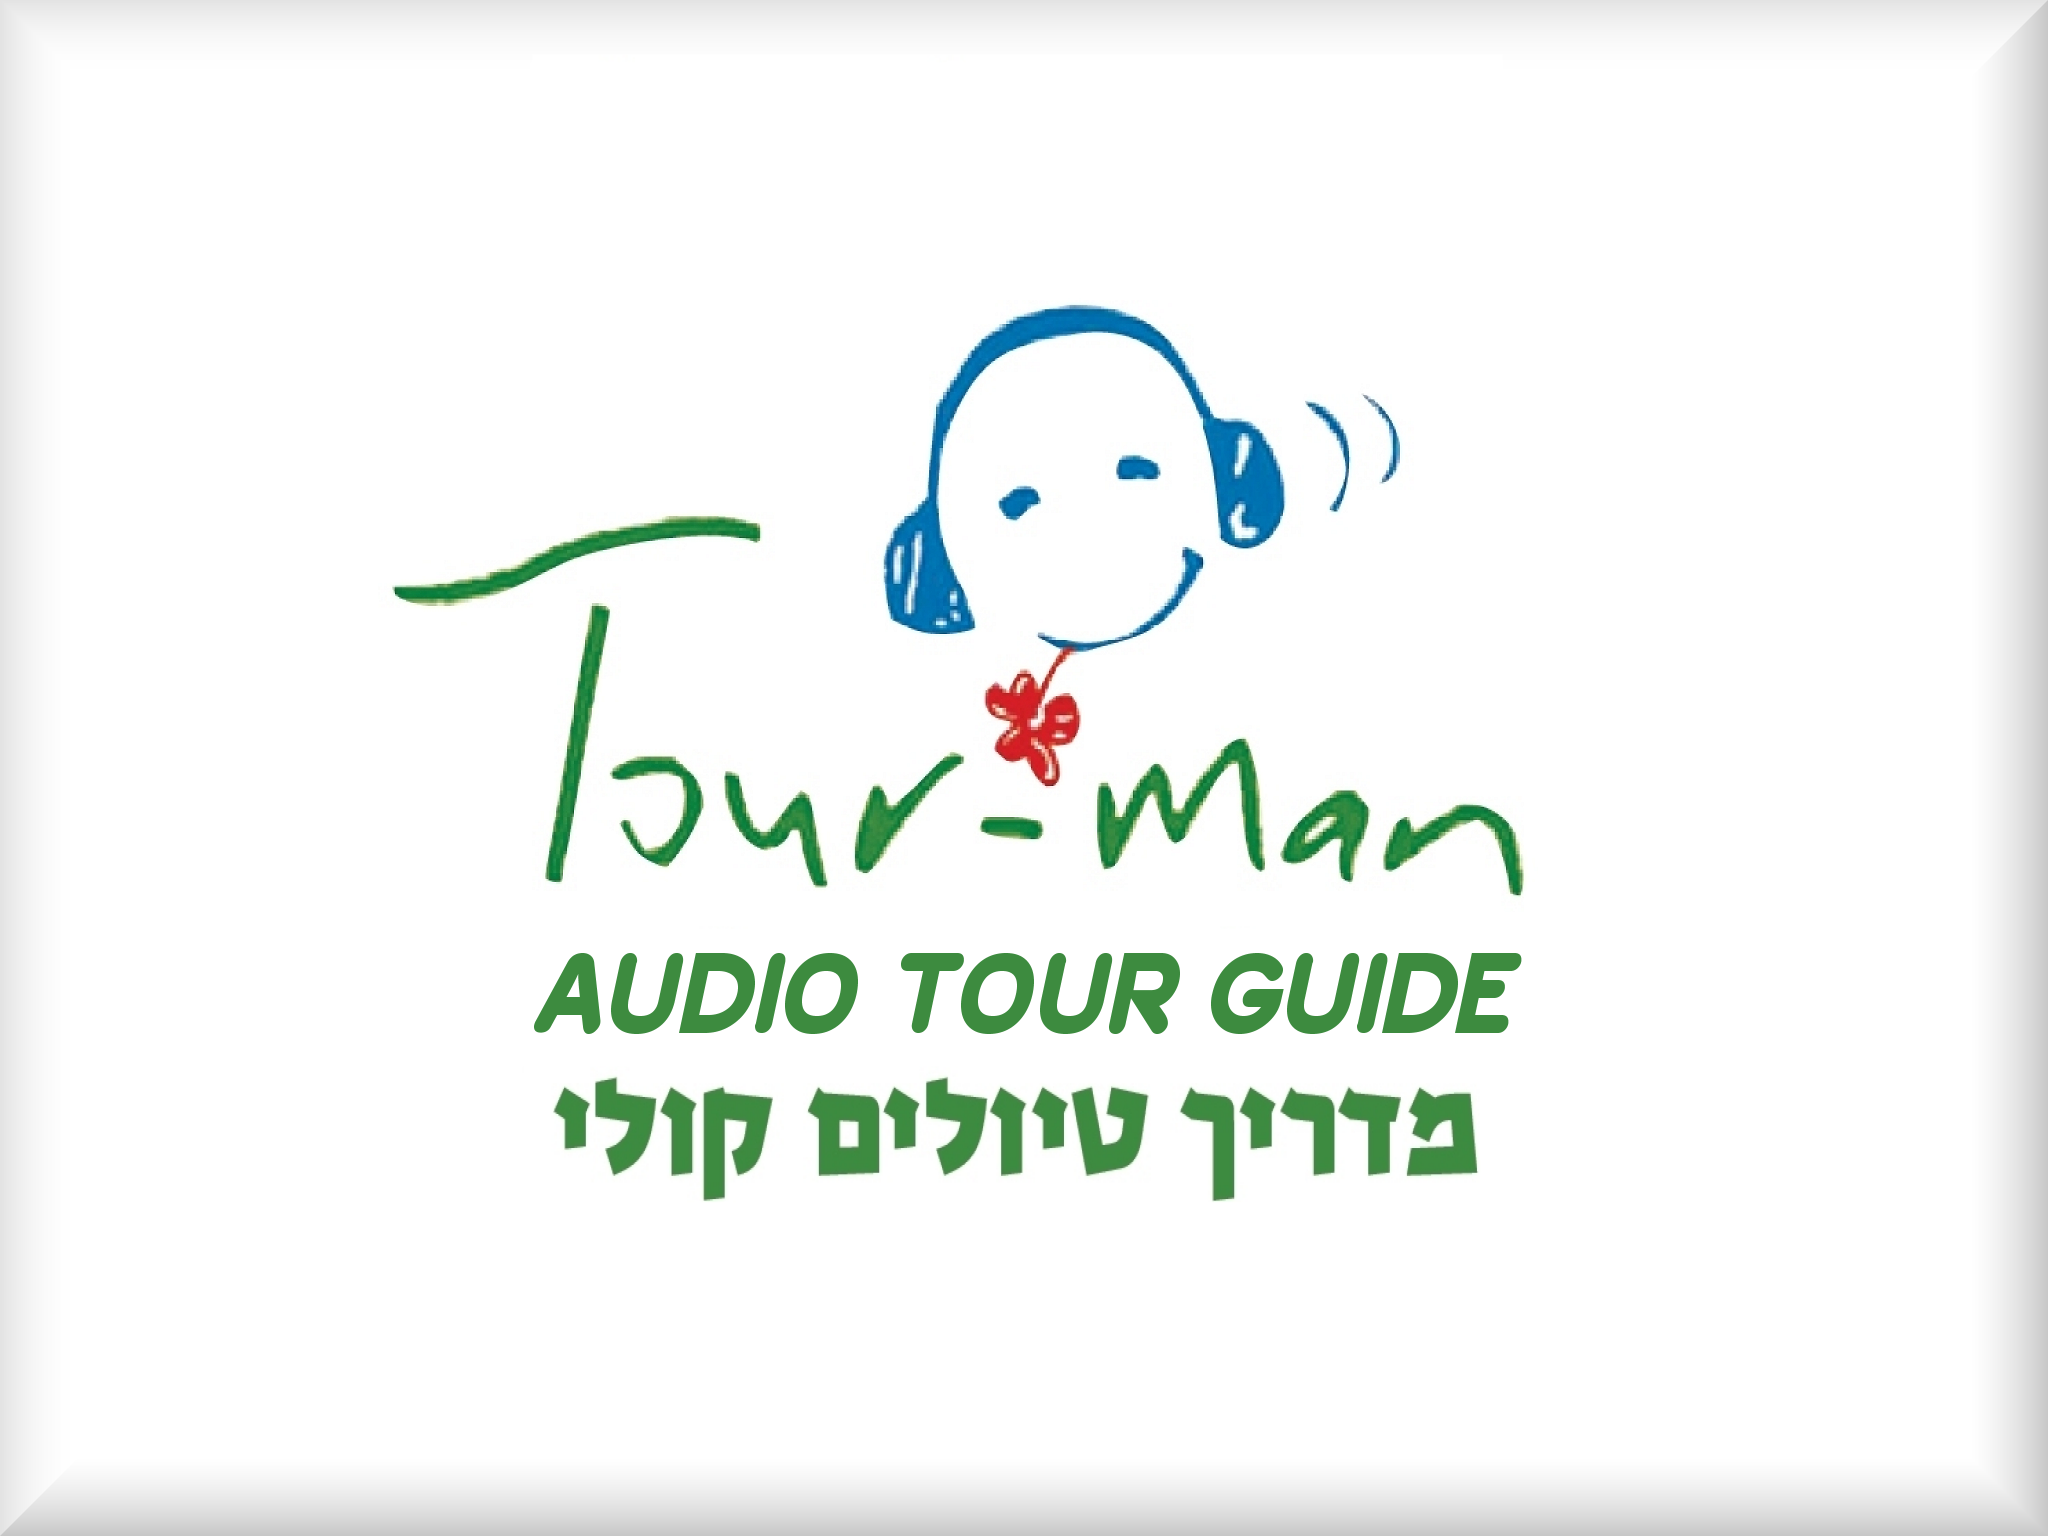 Tour man logo Hebrew and English